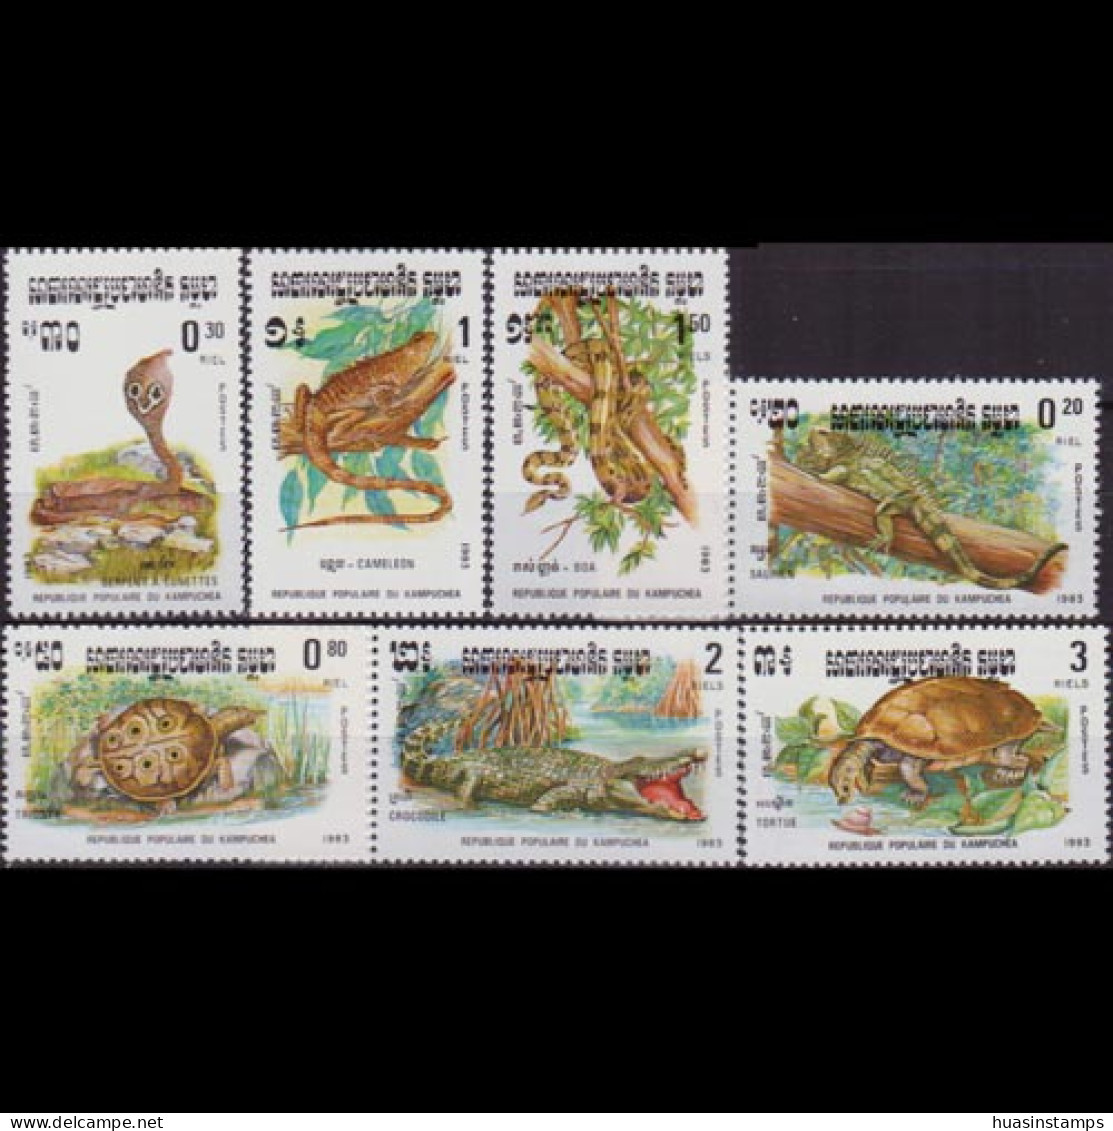 CAMBODIA 1984 - Scott# 420-6 Reptiles Set Of 7 MNH - Cambodge